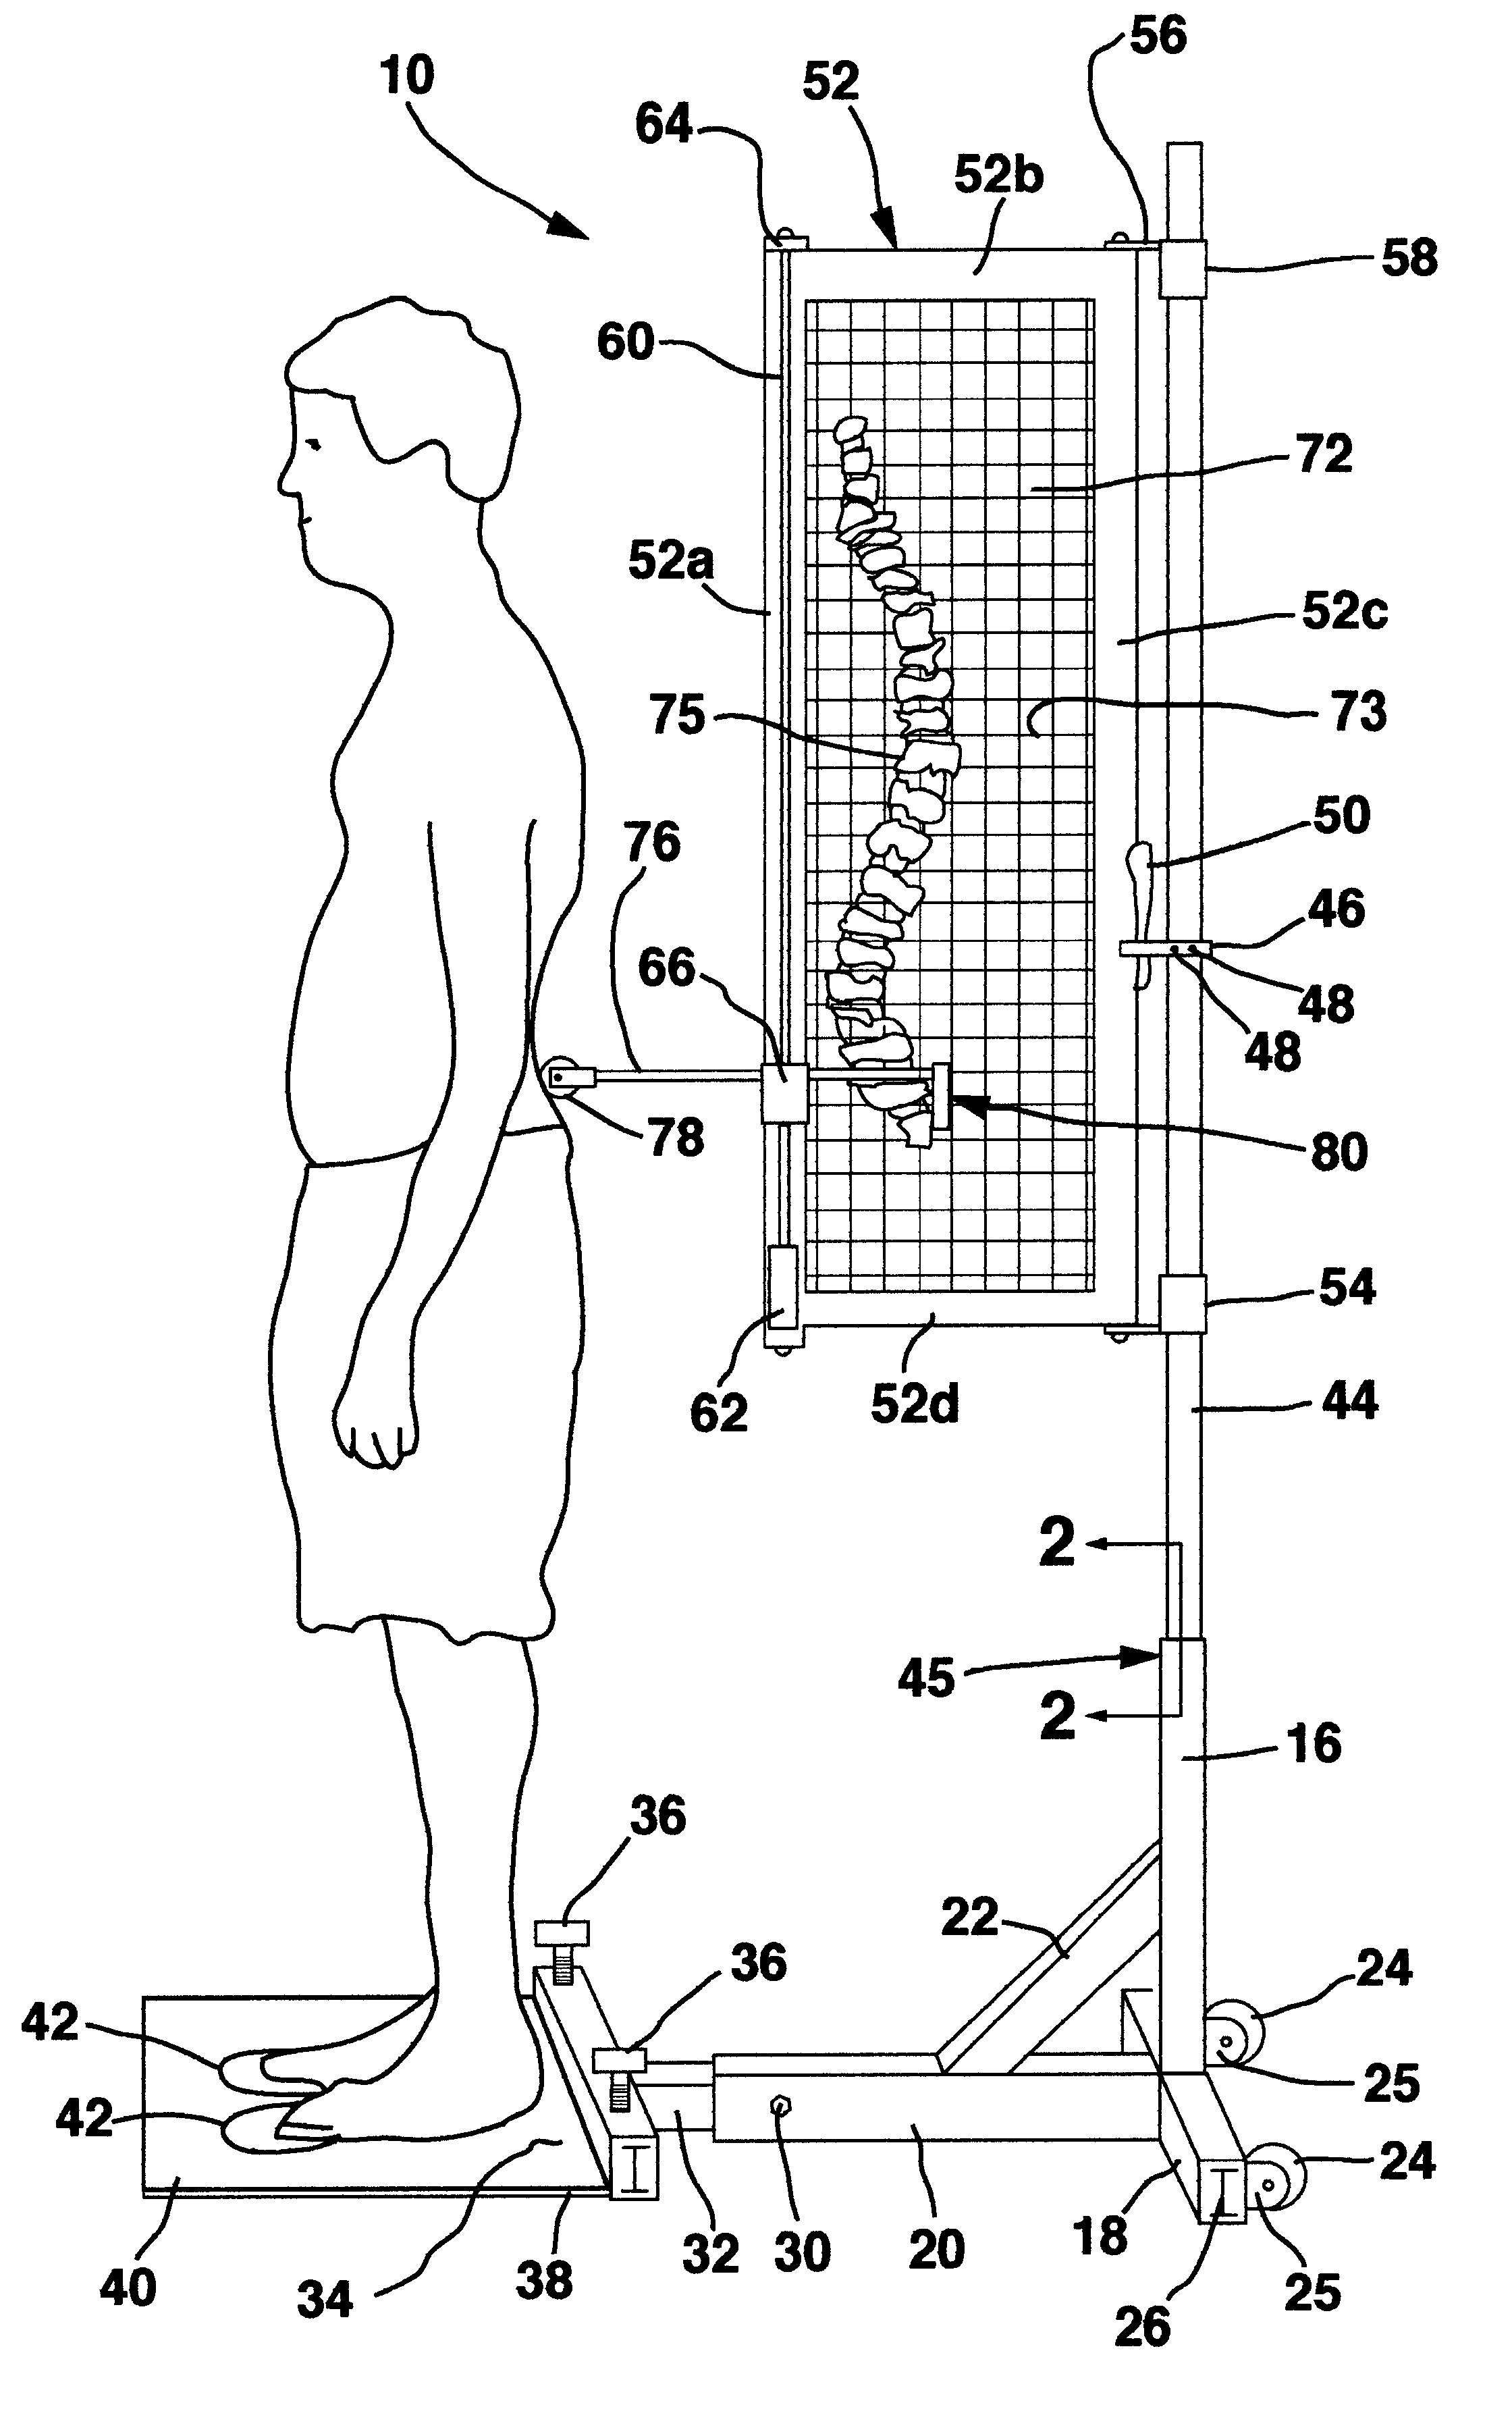 Posture analyzer